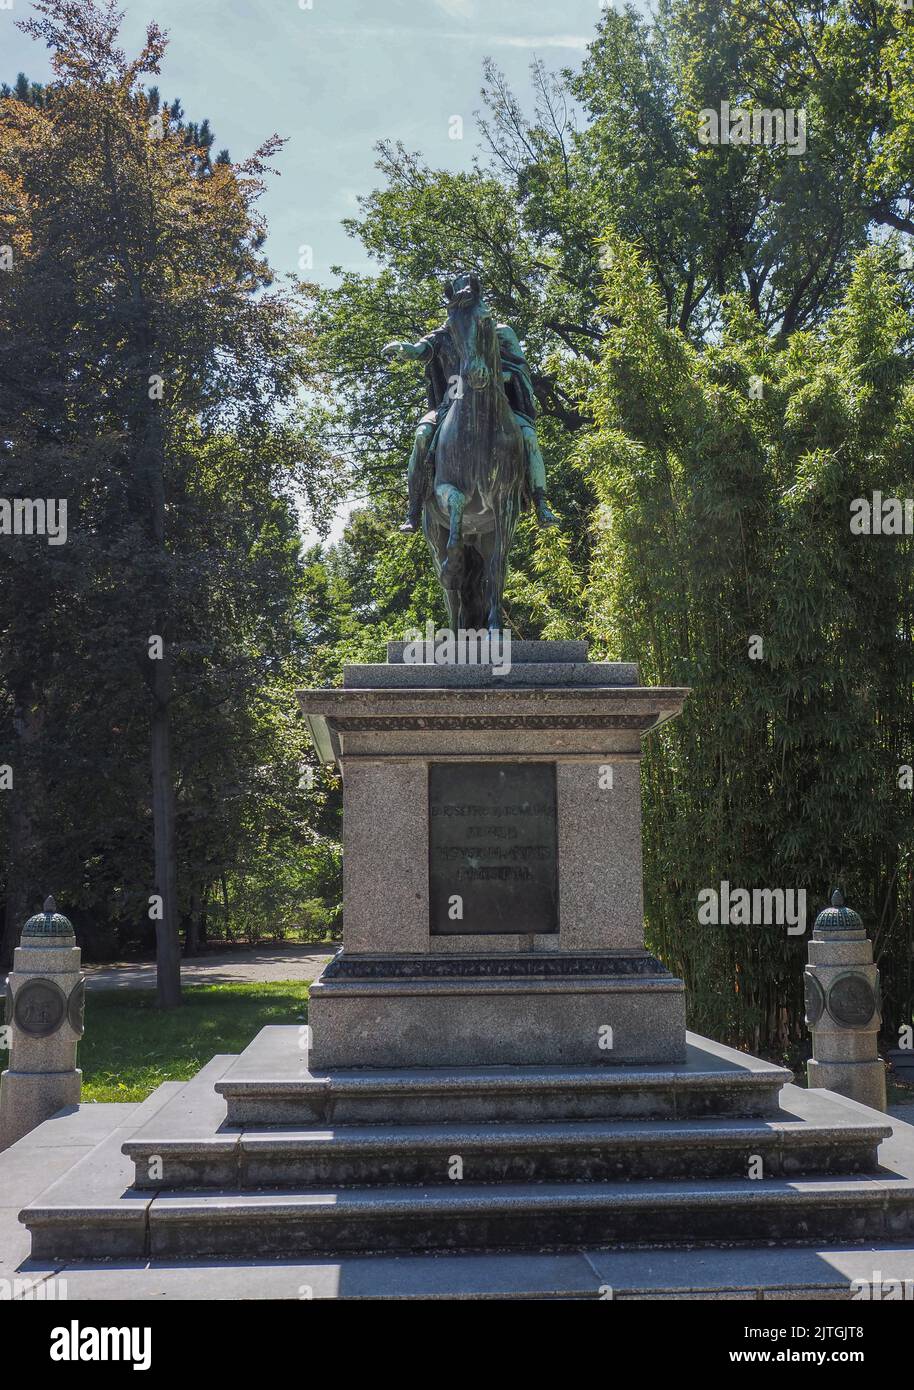 Equestrian monument to Holy Roman Emperor Joseph II (1741 - 1790) erected in Schonbrunn Park, Vienna, Austria. Stock Photo